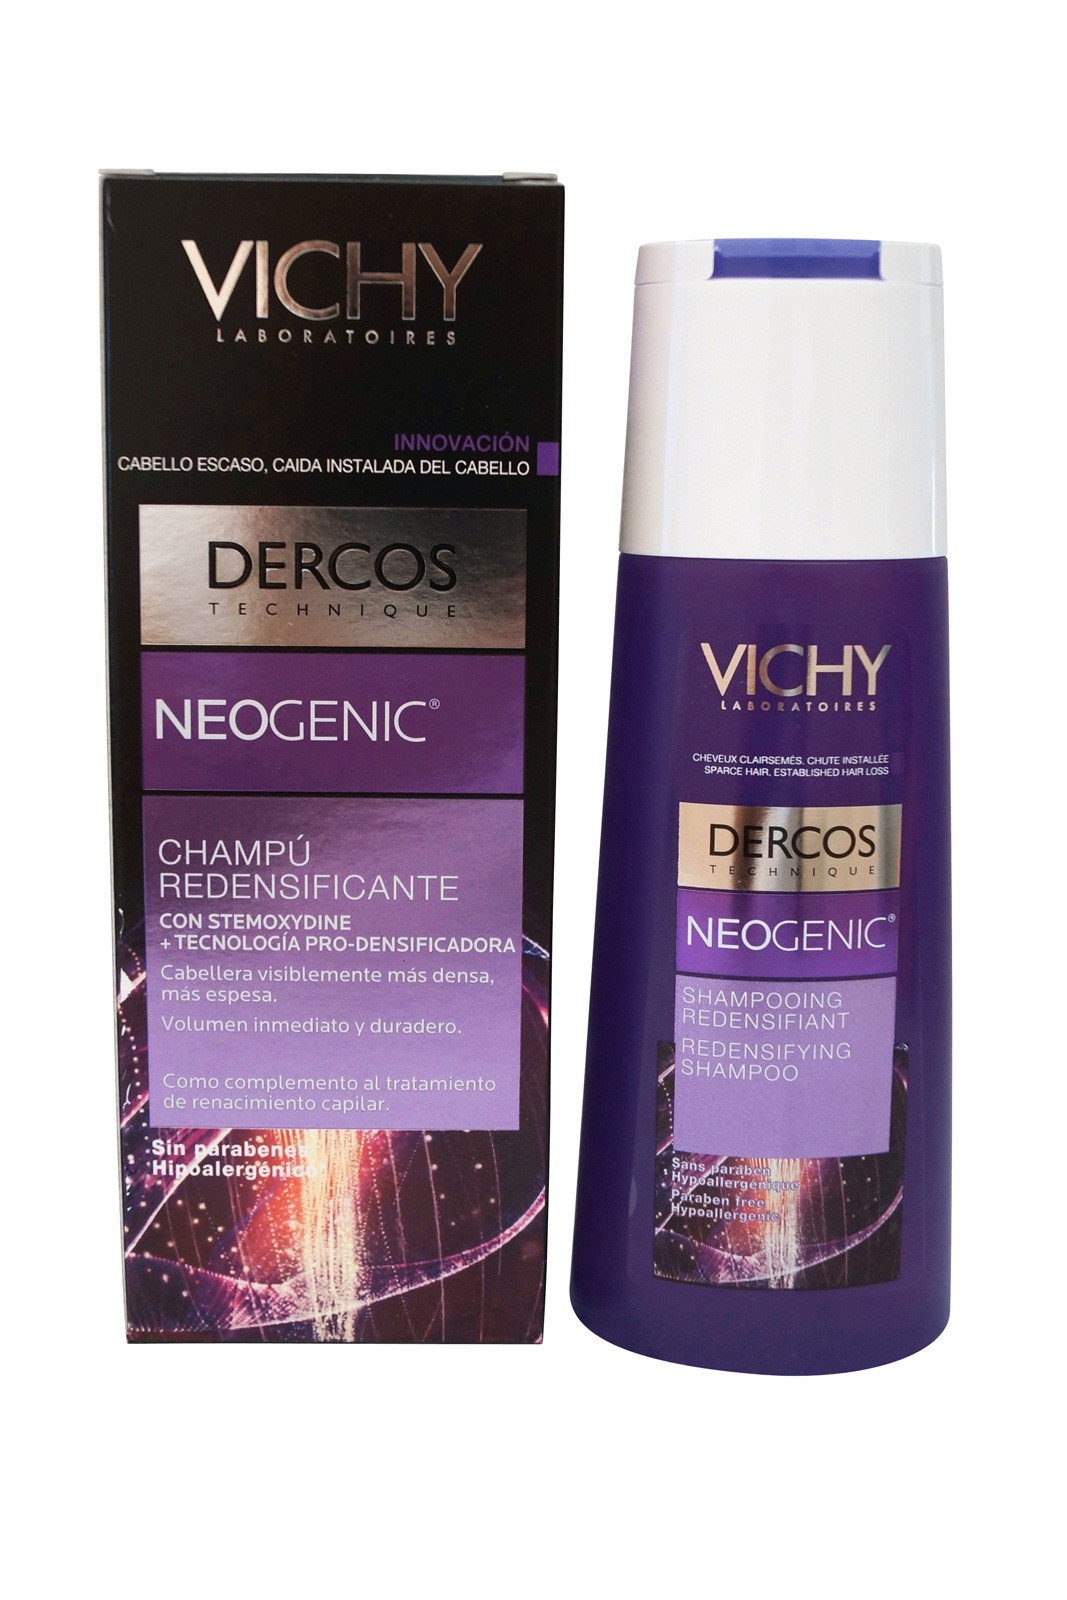 Vichy Dercos Neogenic Redensifying Shampoo 200ml - image 2 of 4